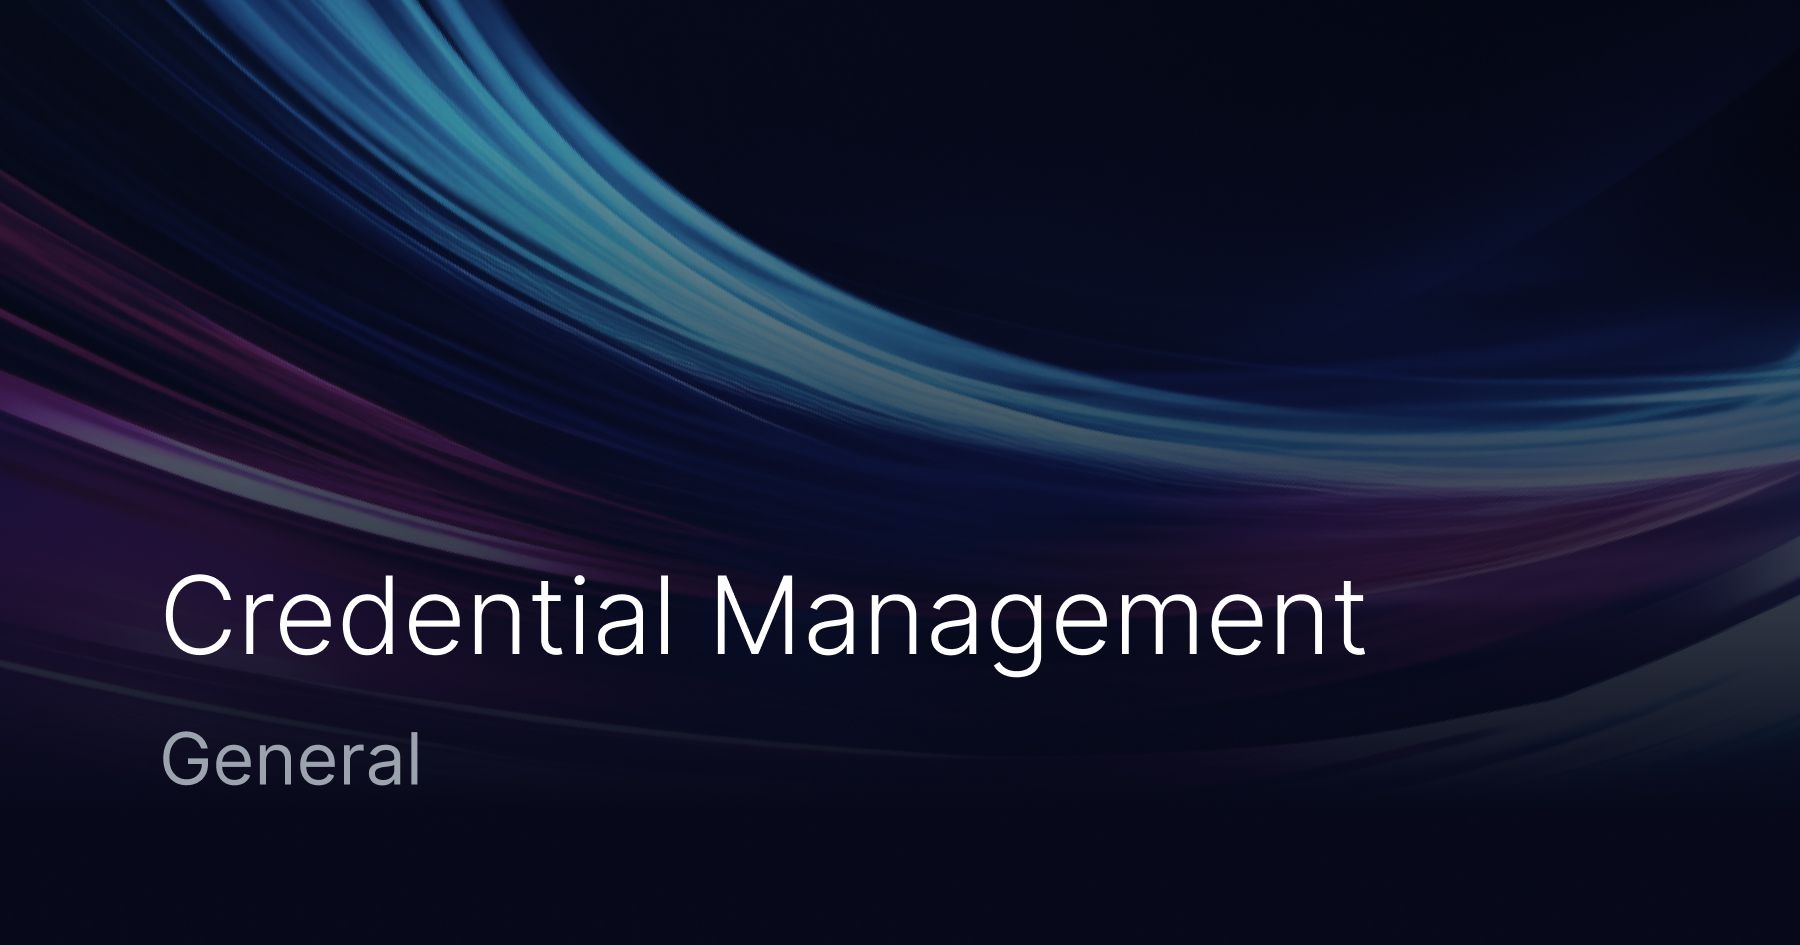 Credential Management explained: Best Practices